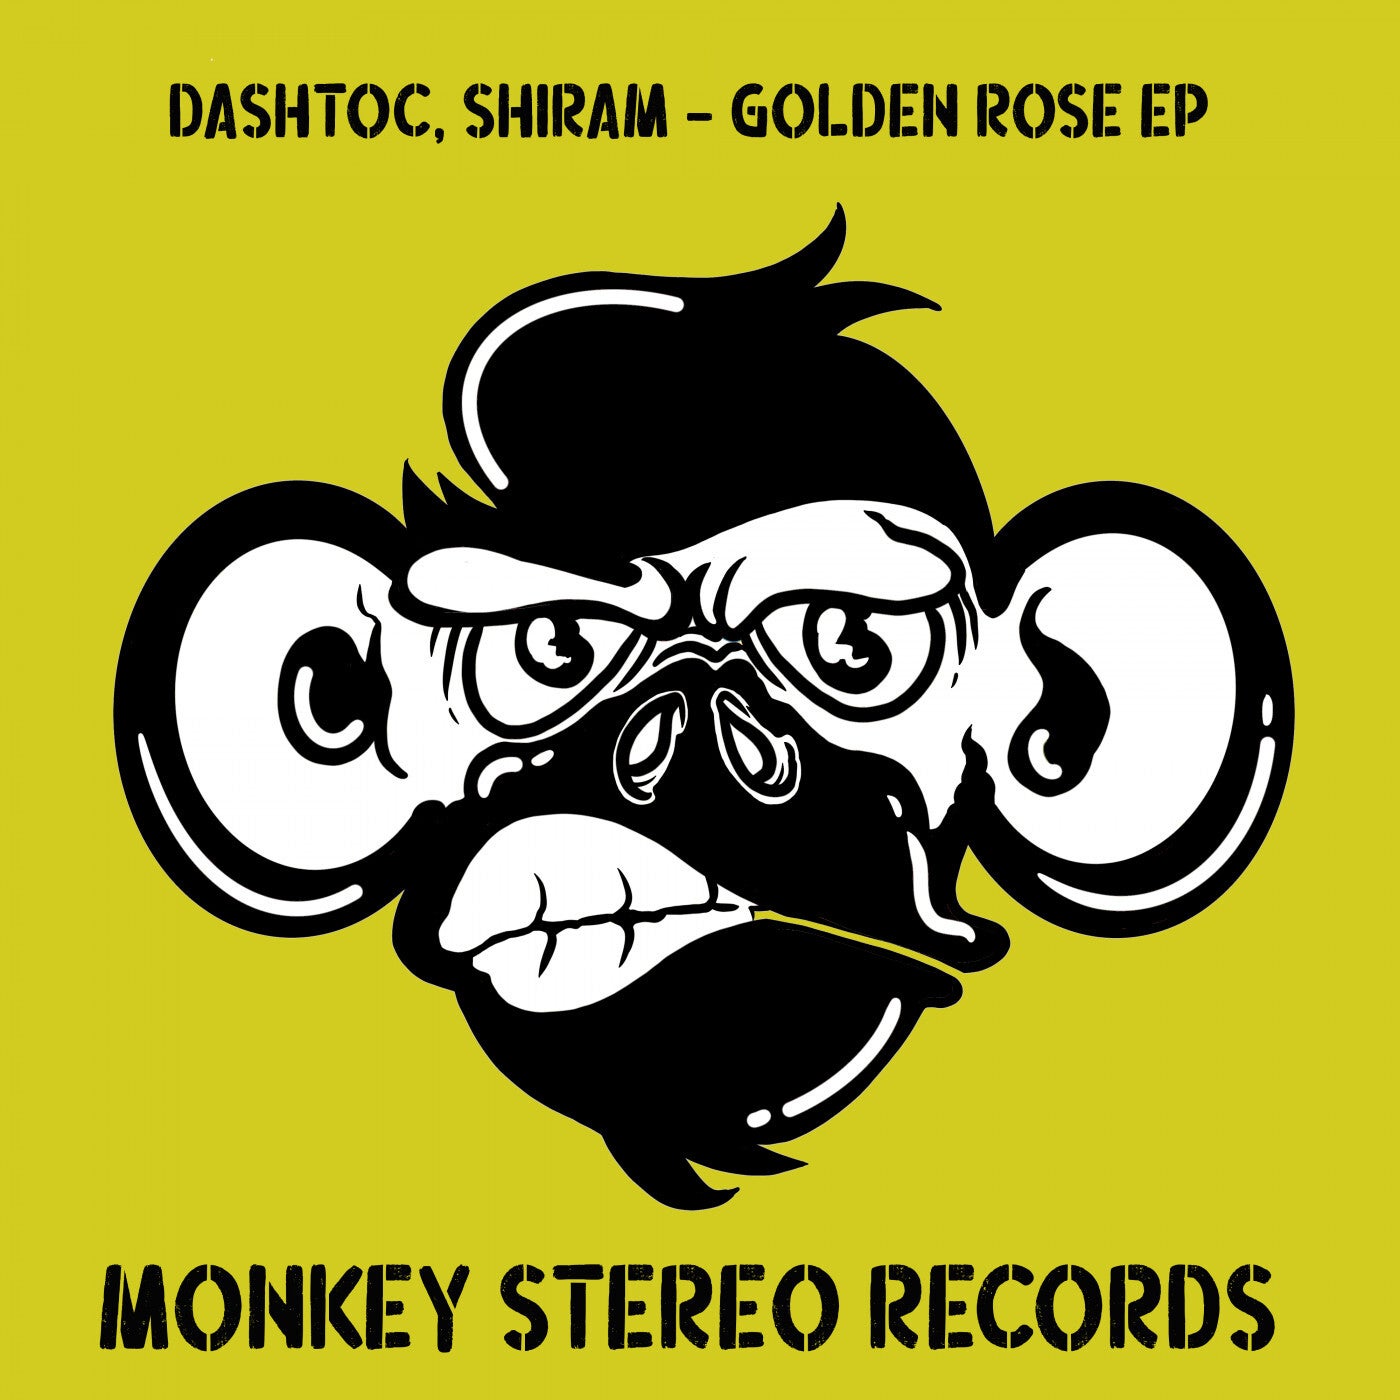 Dashtoc, Shiram - Golden Rose EP [MSR0138]